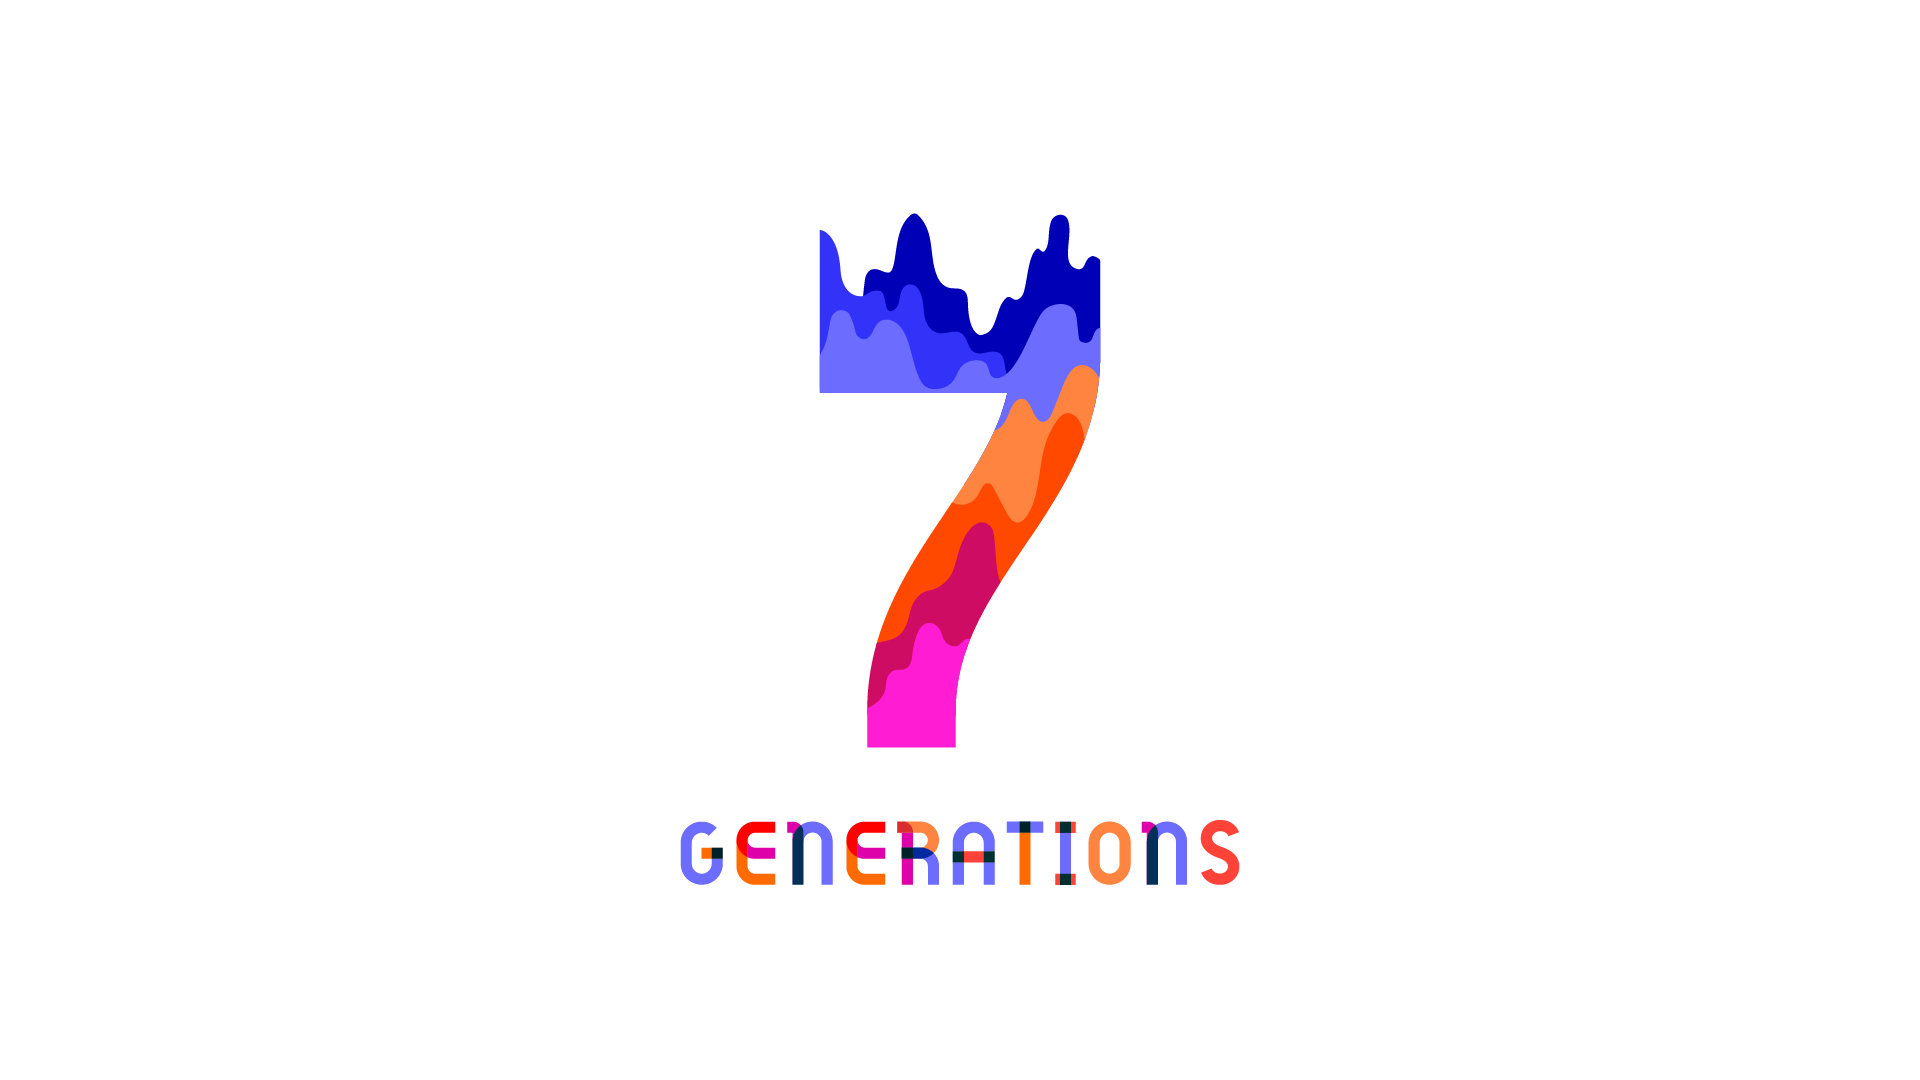 7 GENERATIONS